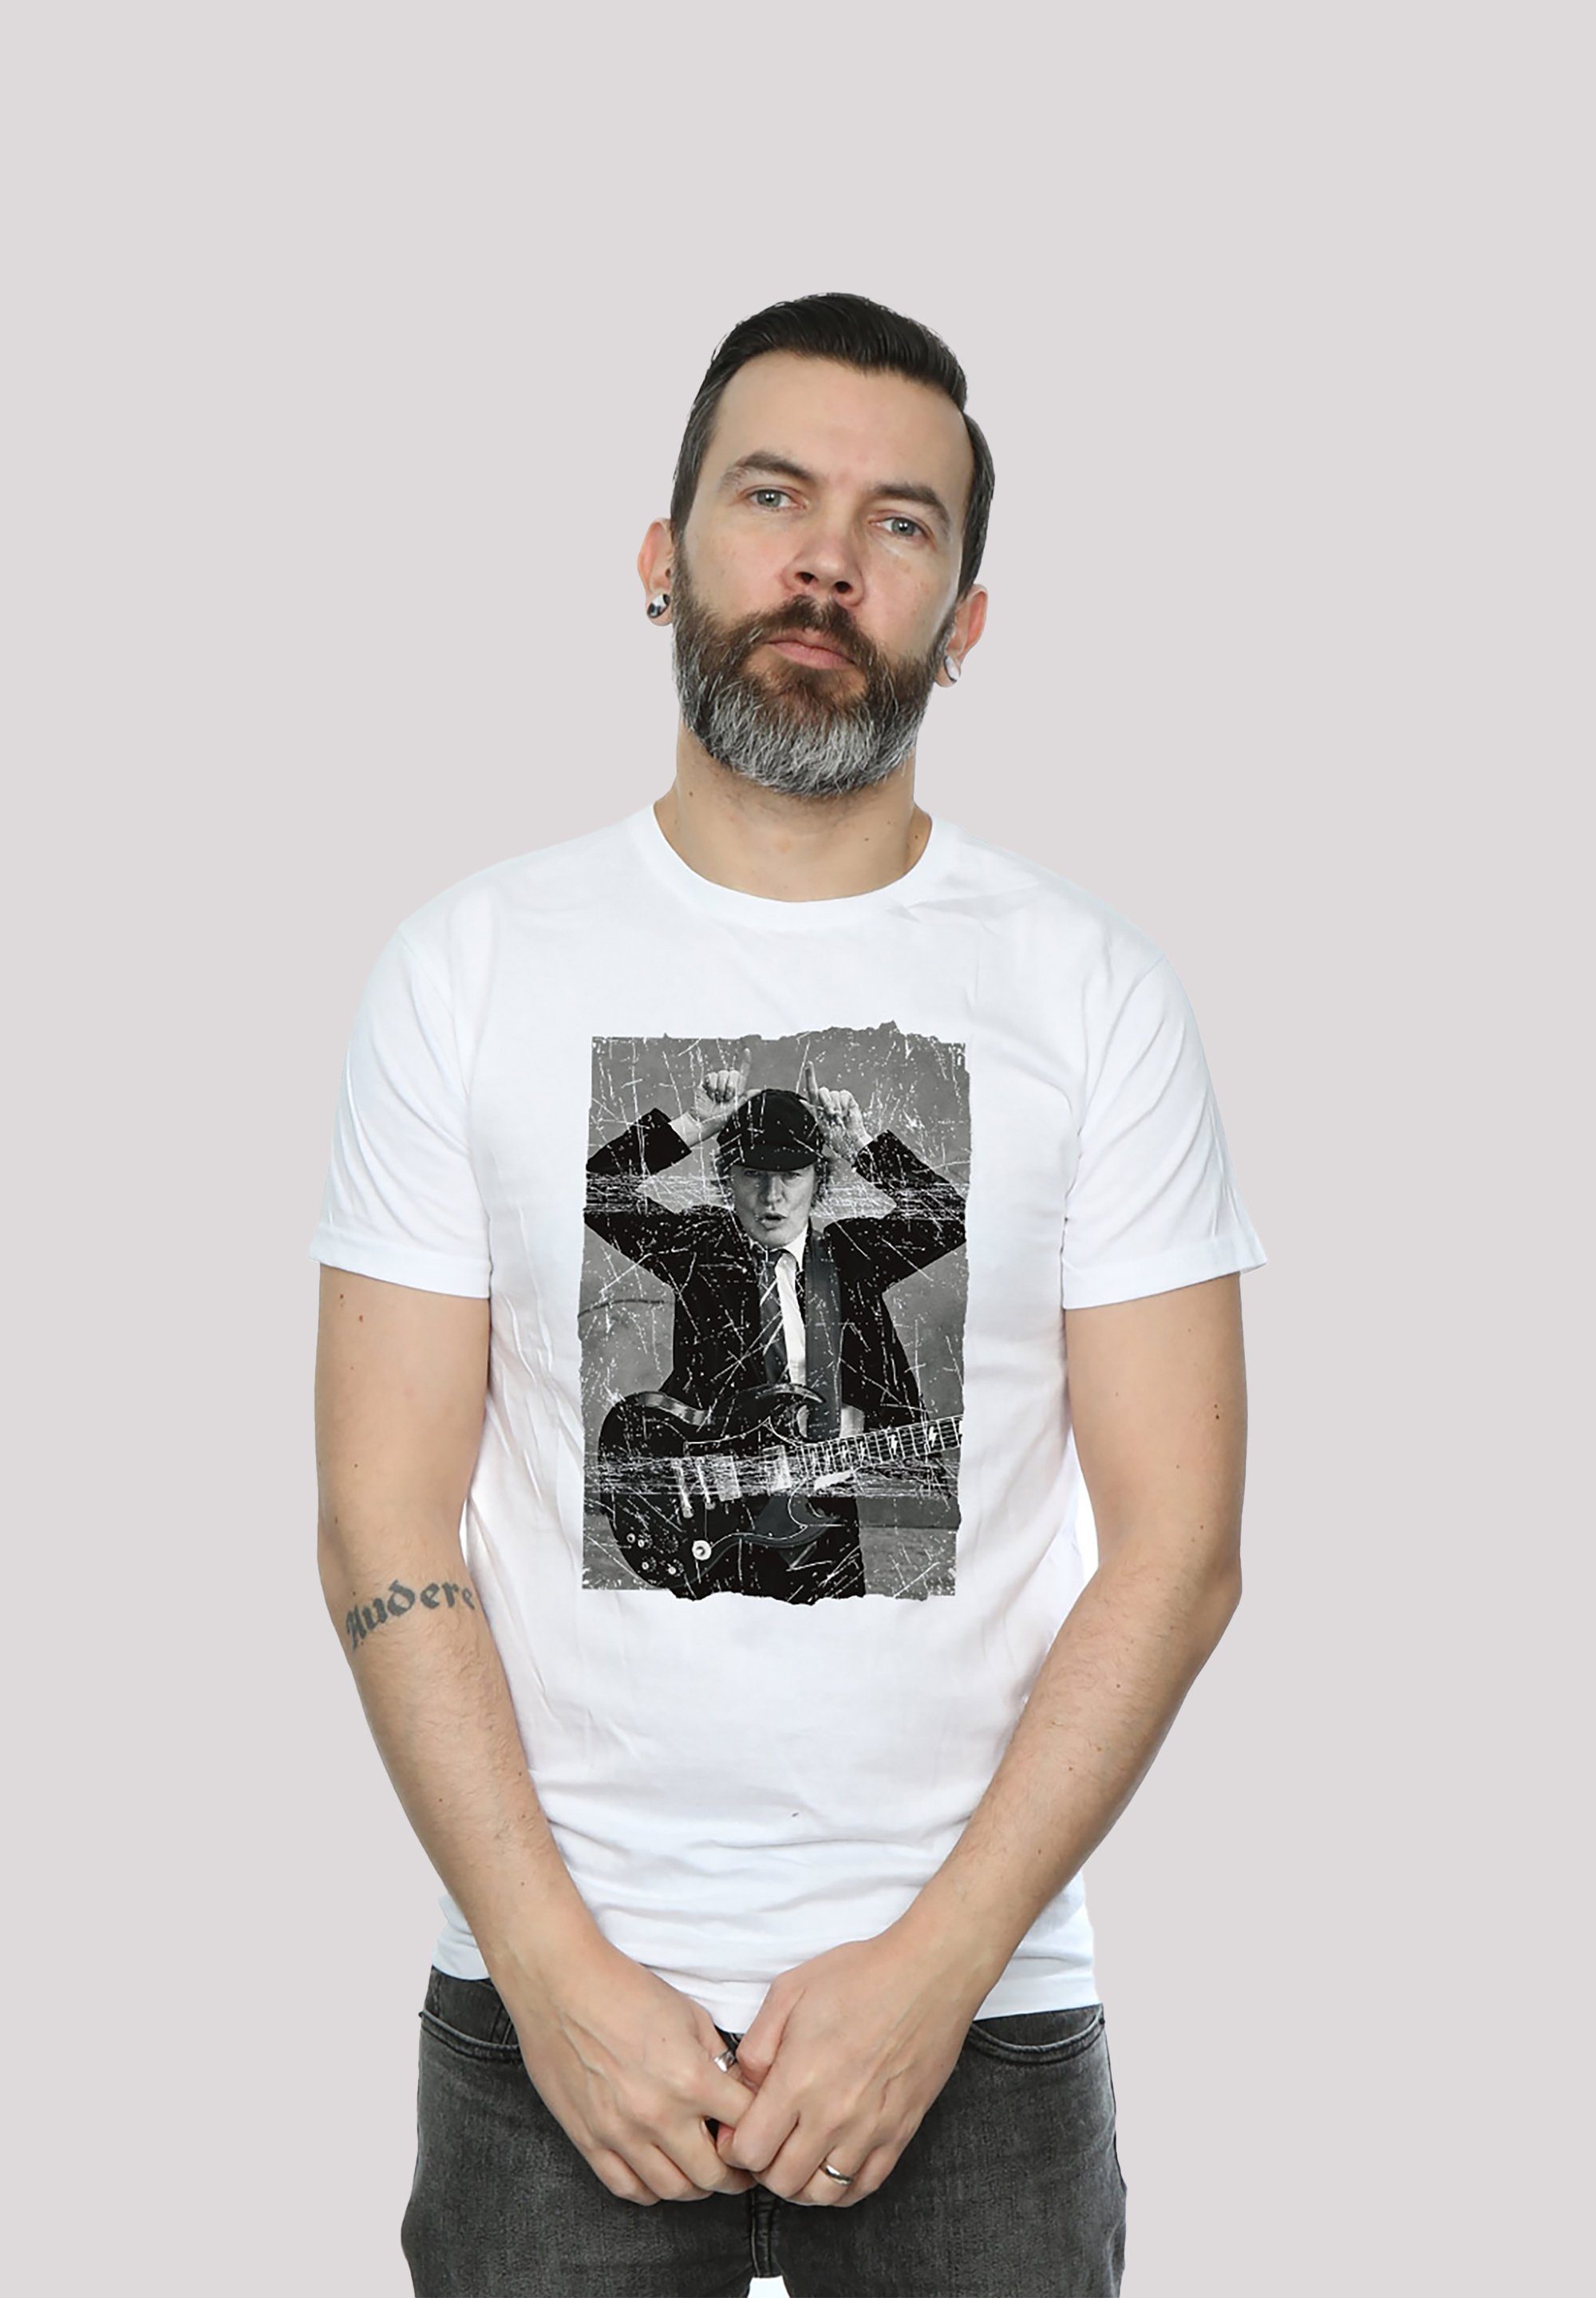 F4NT4STIC T-Shirt ACDC Angus Young Foto für Kinder & Herren Print weiß | T-Shirts